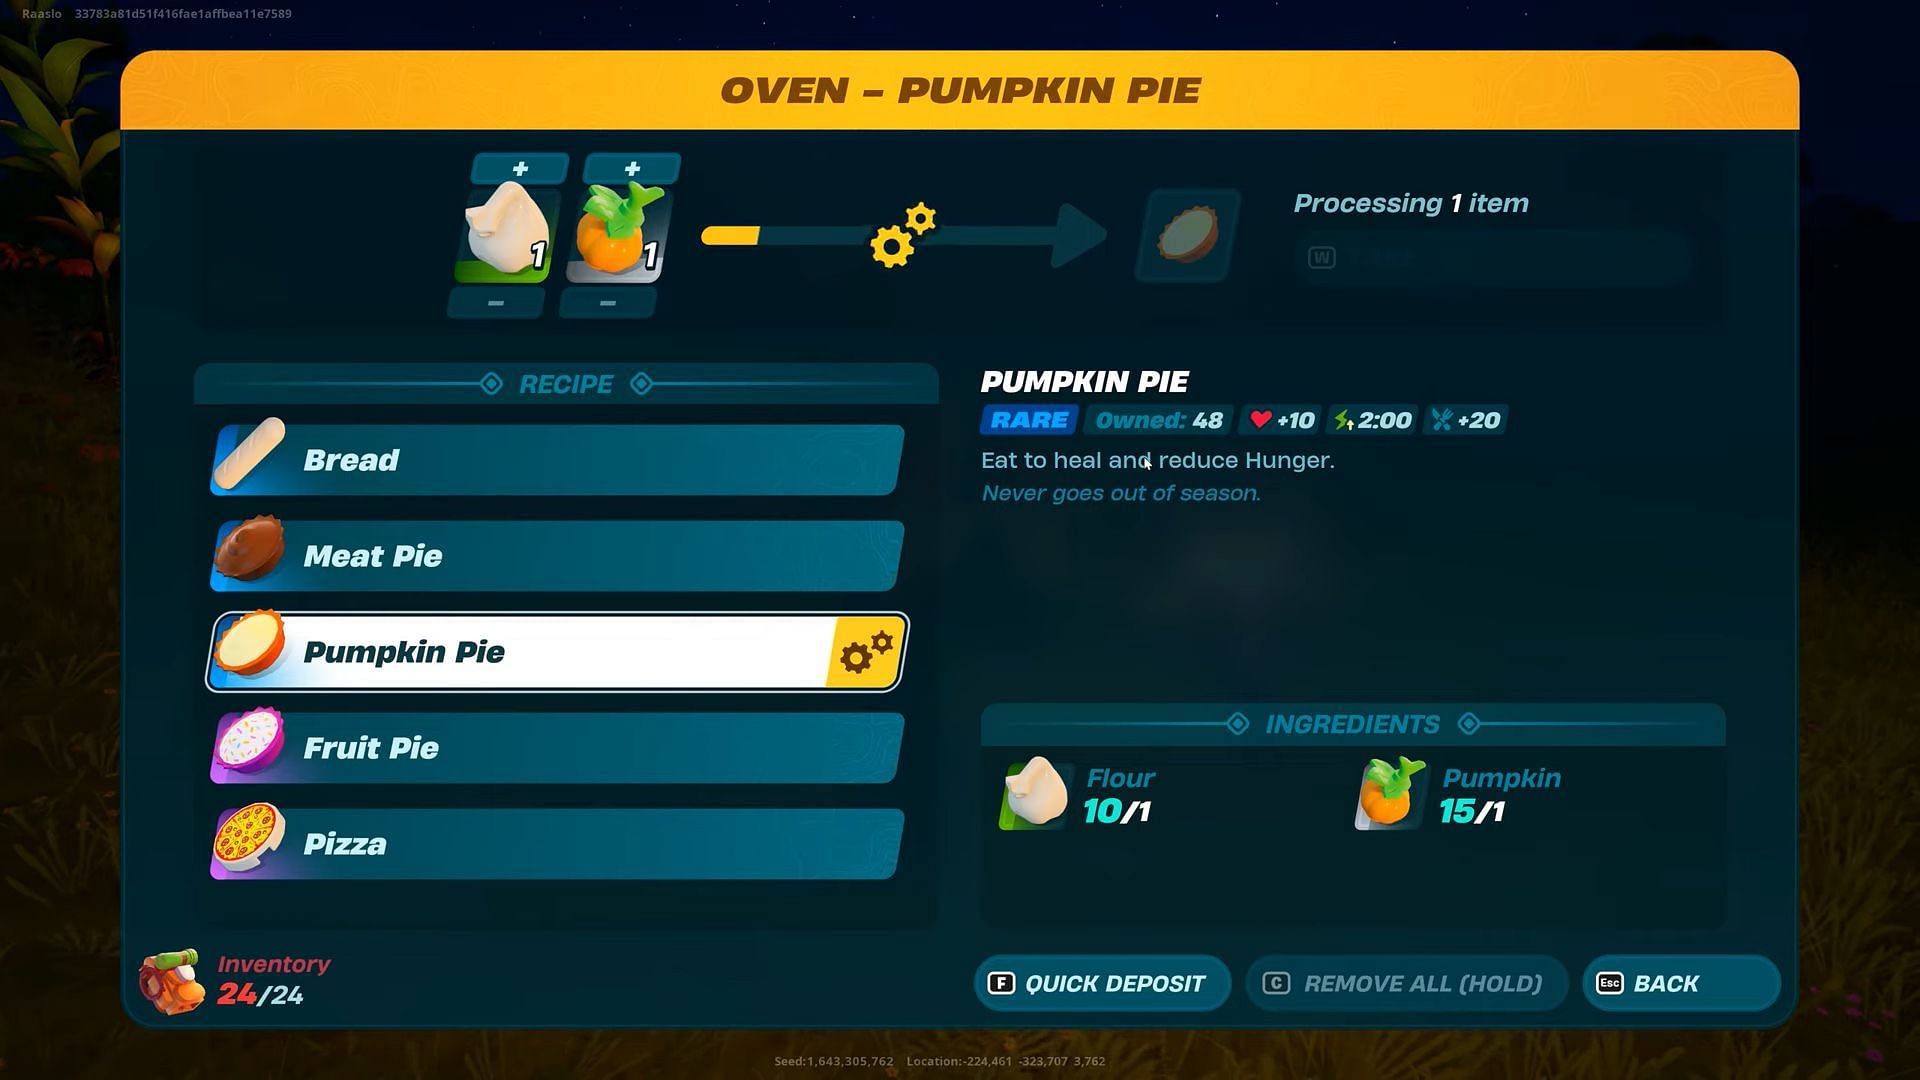 Pumpkin Pie (Image via MySpaceGuide on YouTube)